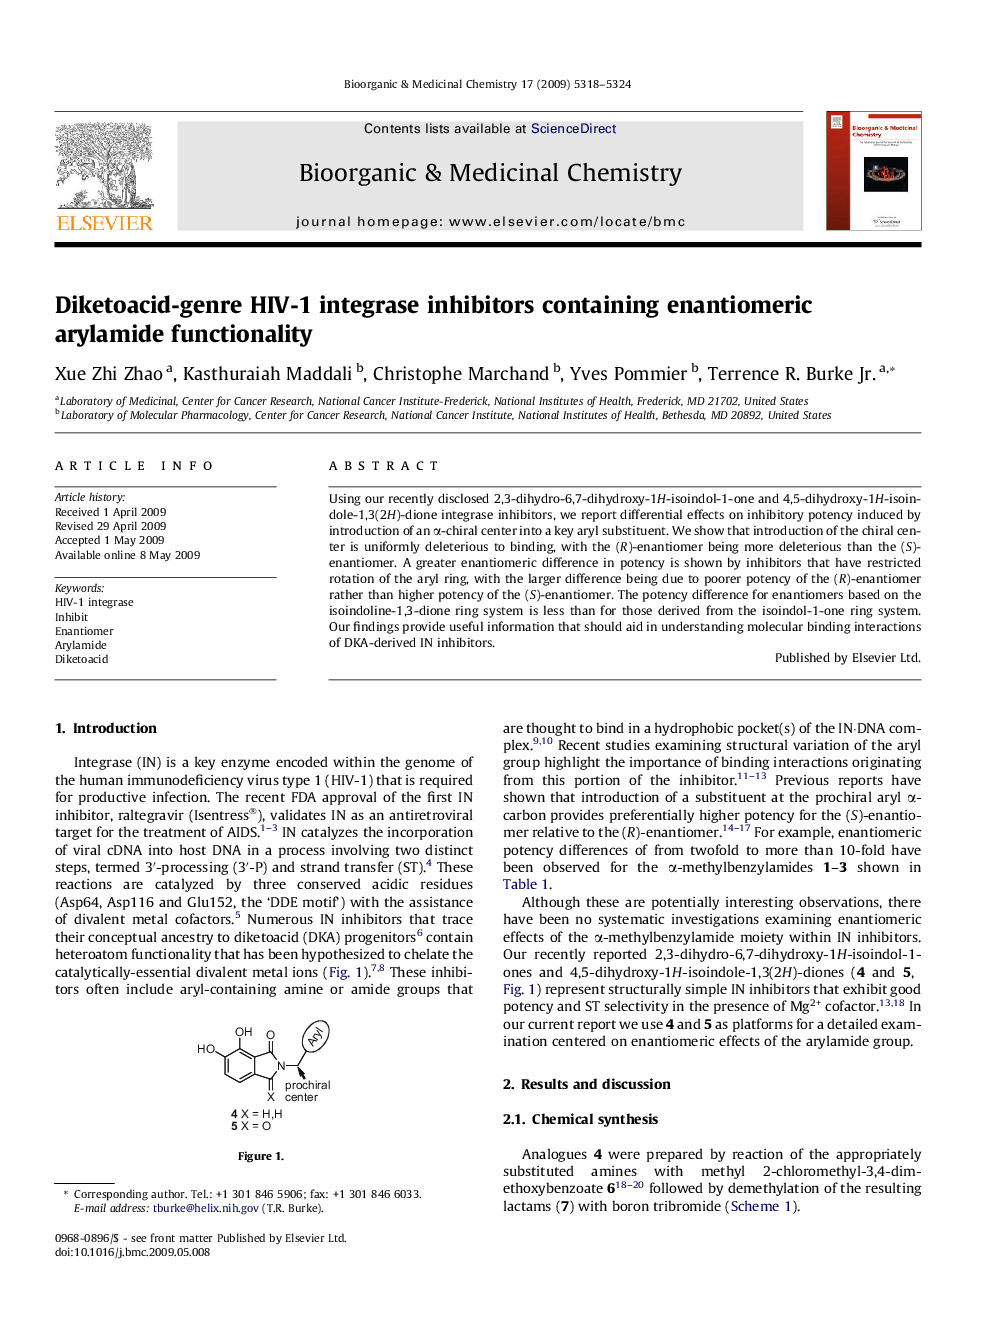 Diketoacid-genre HIV-1 integrase inhibitors containing enantiomeric arylamide functionality